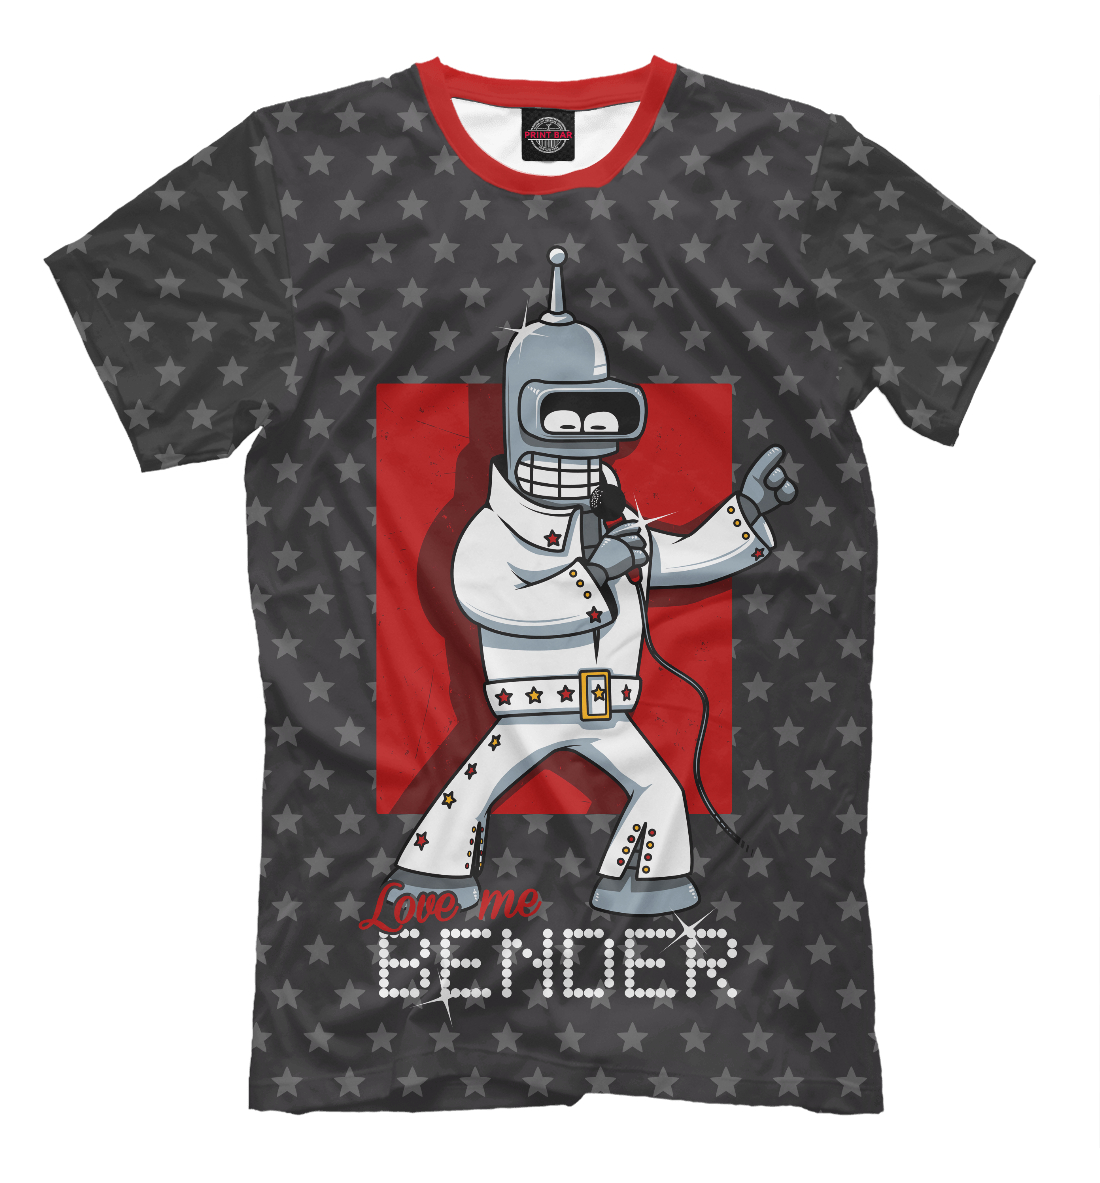 Футболка Bender Presley для мужчин, артикул: FUT-407946-fut-2mp